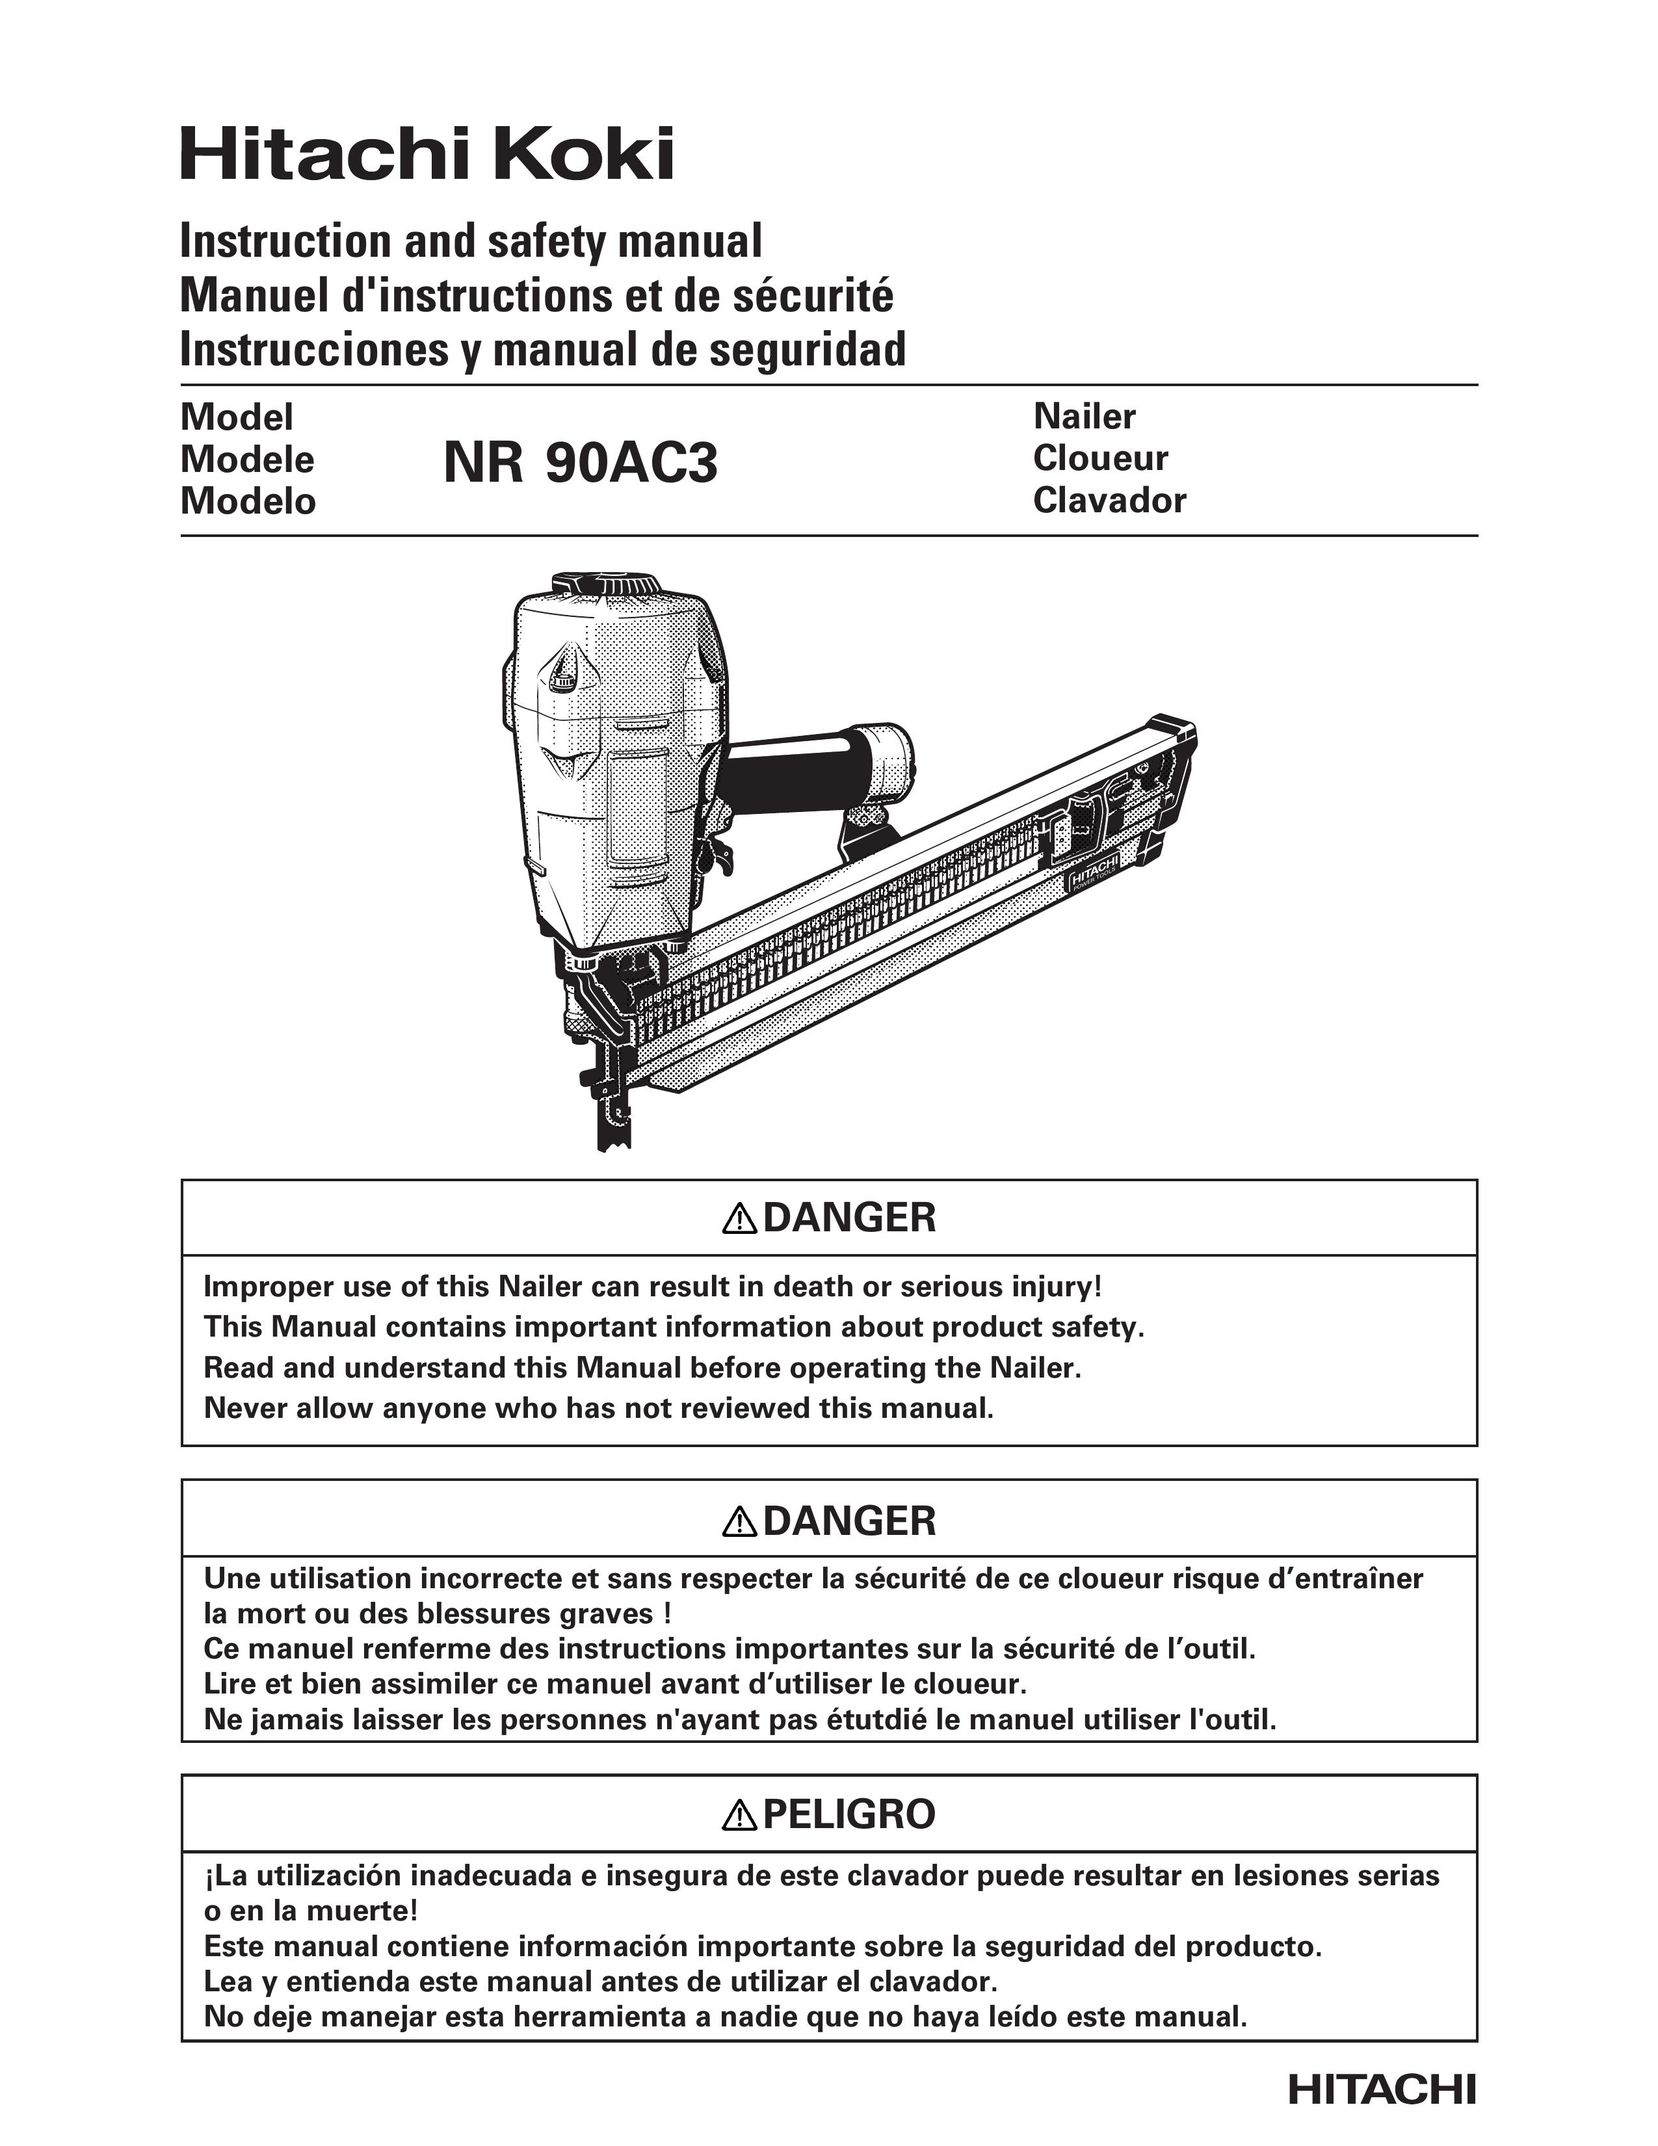 Hitachi Koki USA NR 90AC3 Nail Gun User Manual